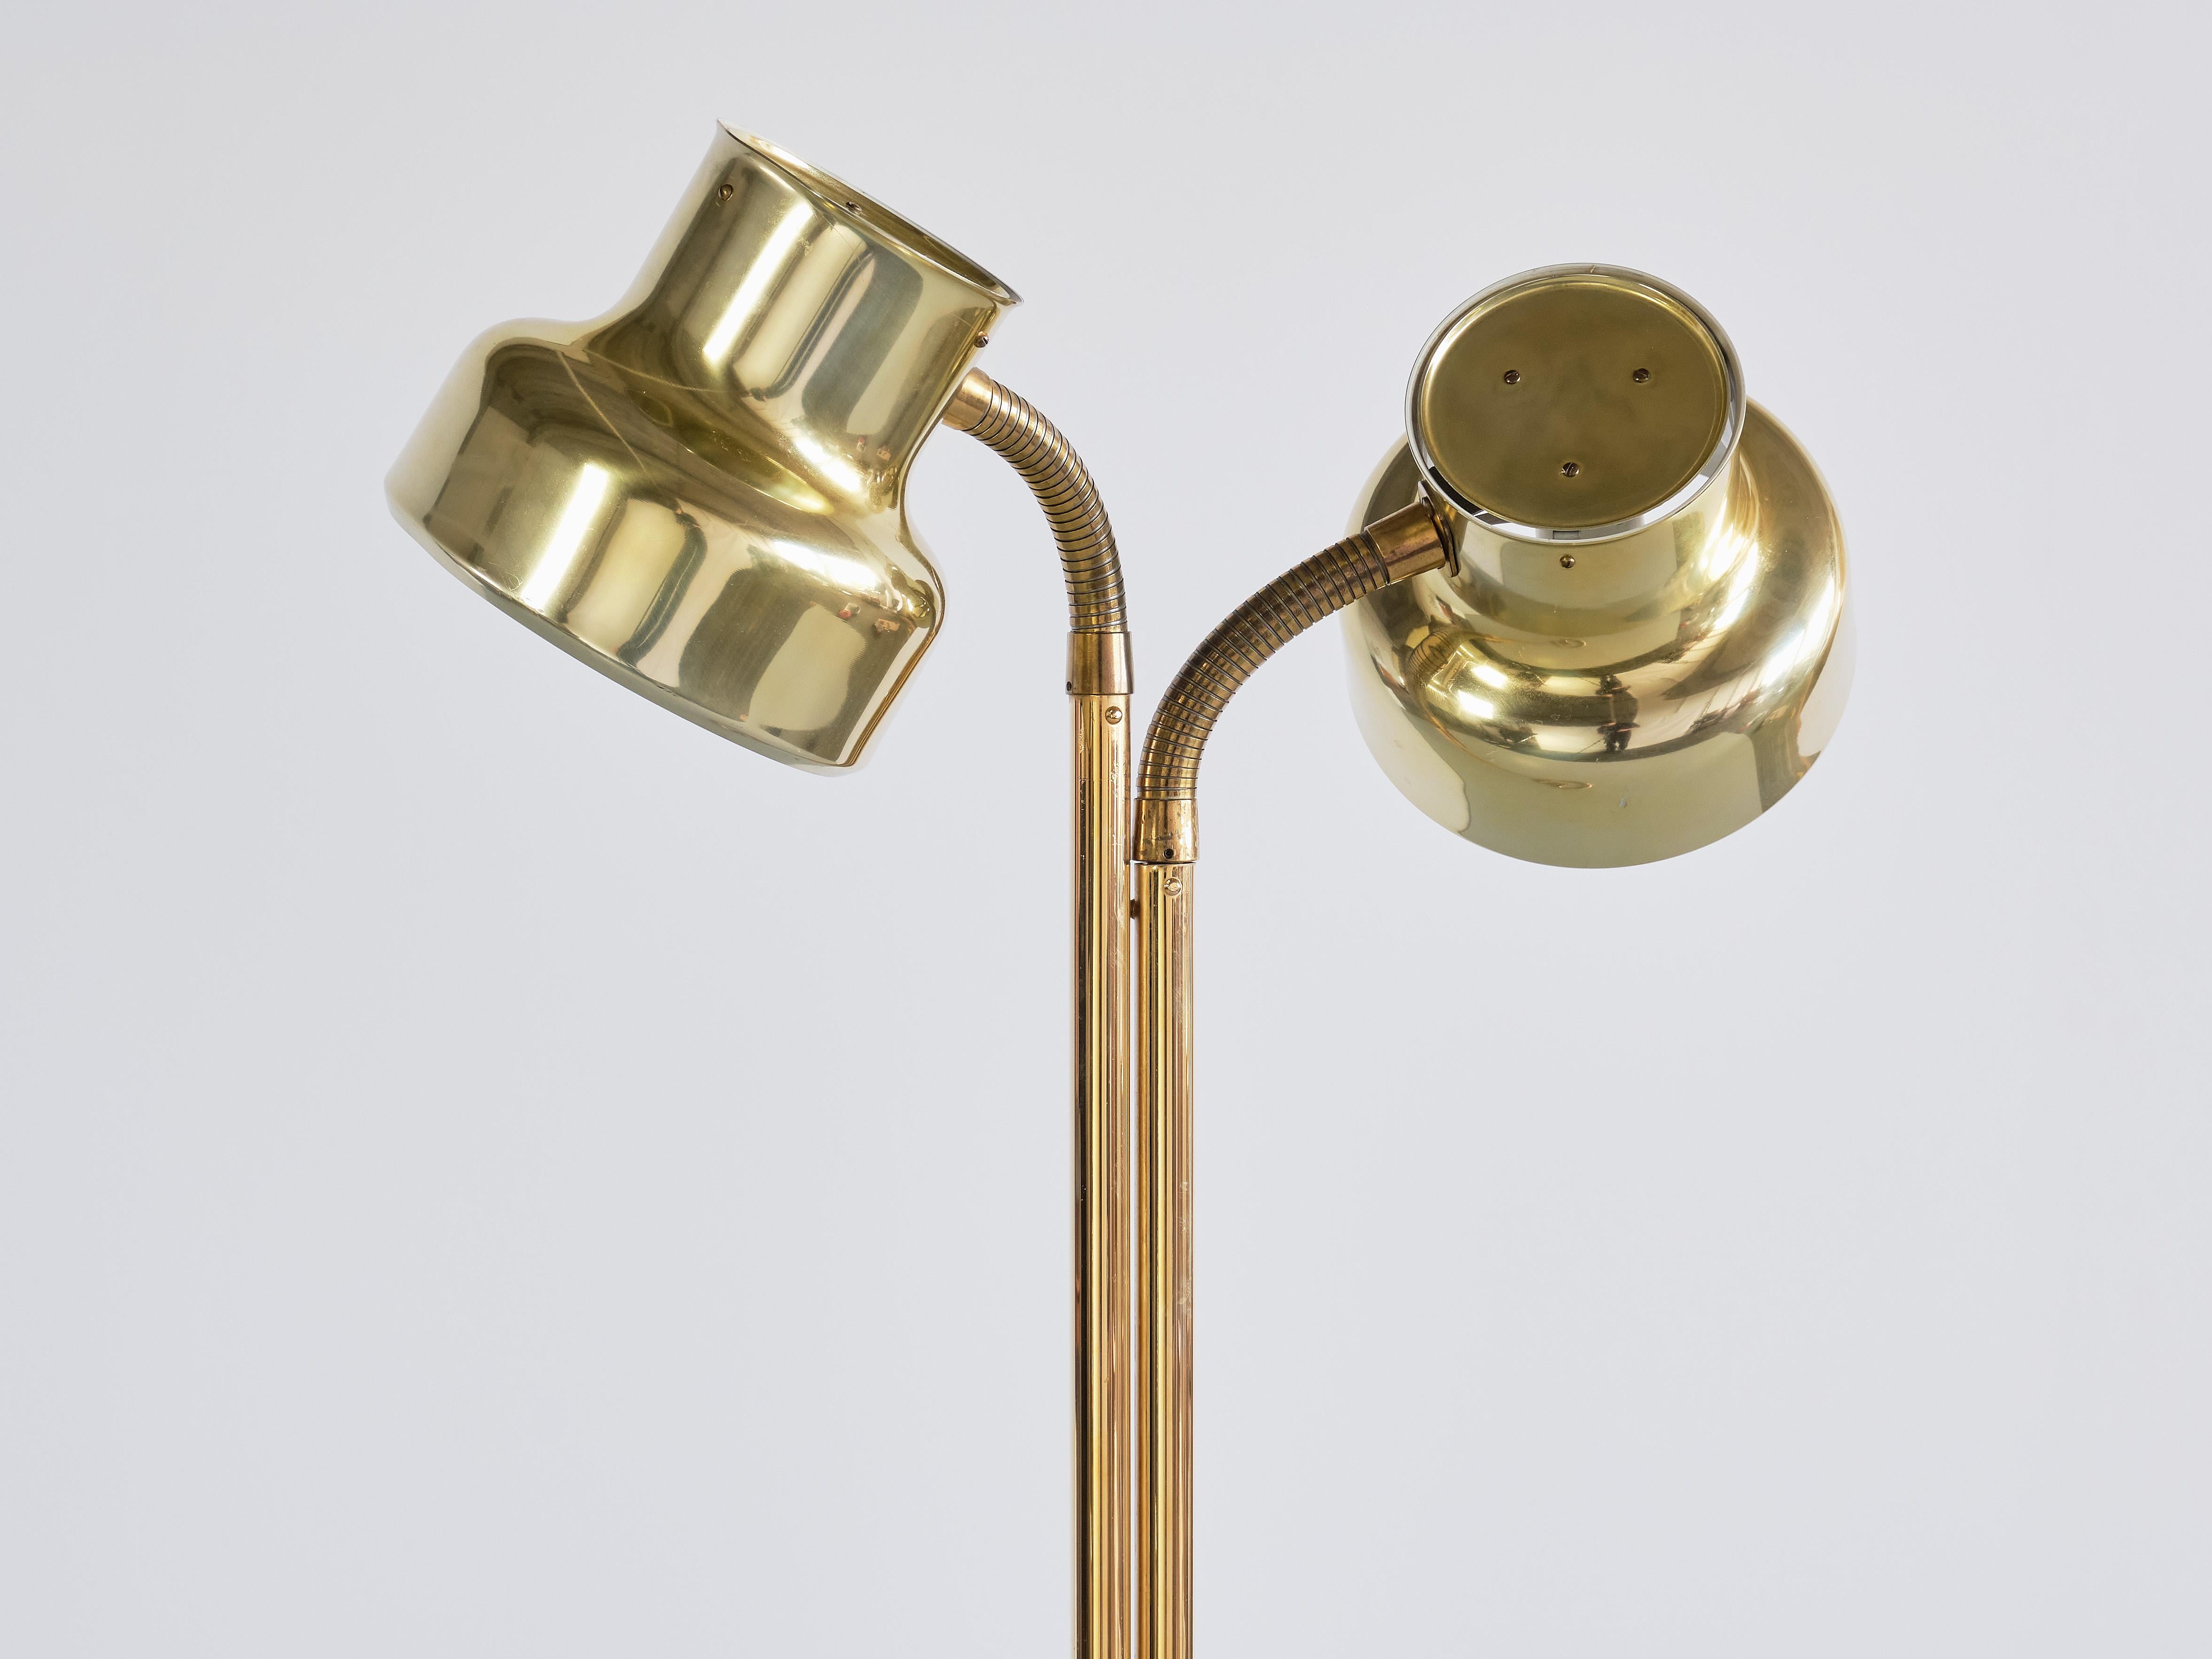 Scandinavian Modern Anders Pehrson 'Bumling' Floor Lamp in Brass, Atelje Lyktan, Sweden, 1968 For Sale